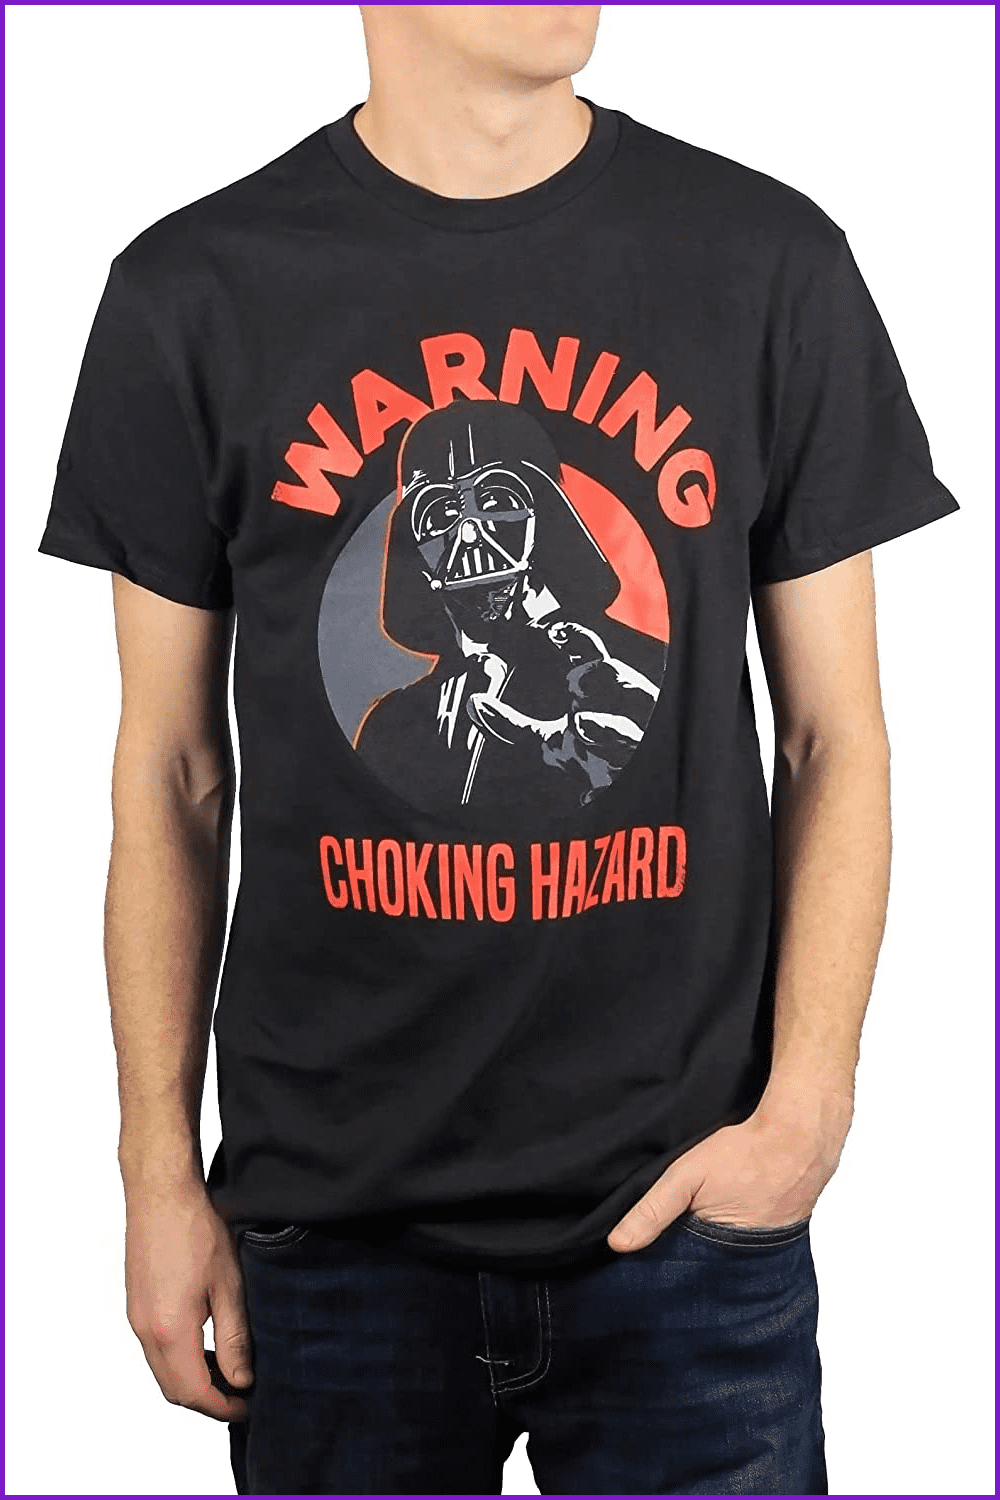 Star Wars Darth Vader Choking Hazard Empire Funny Humor Pun Mens Adult Tee Graphic T-Shirt for Men Tshirt Clothing Apparel.